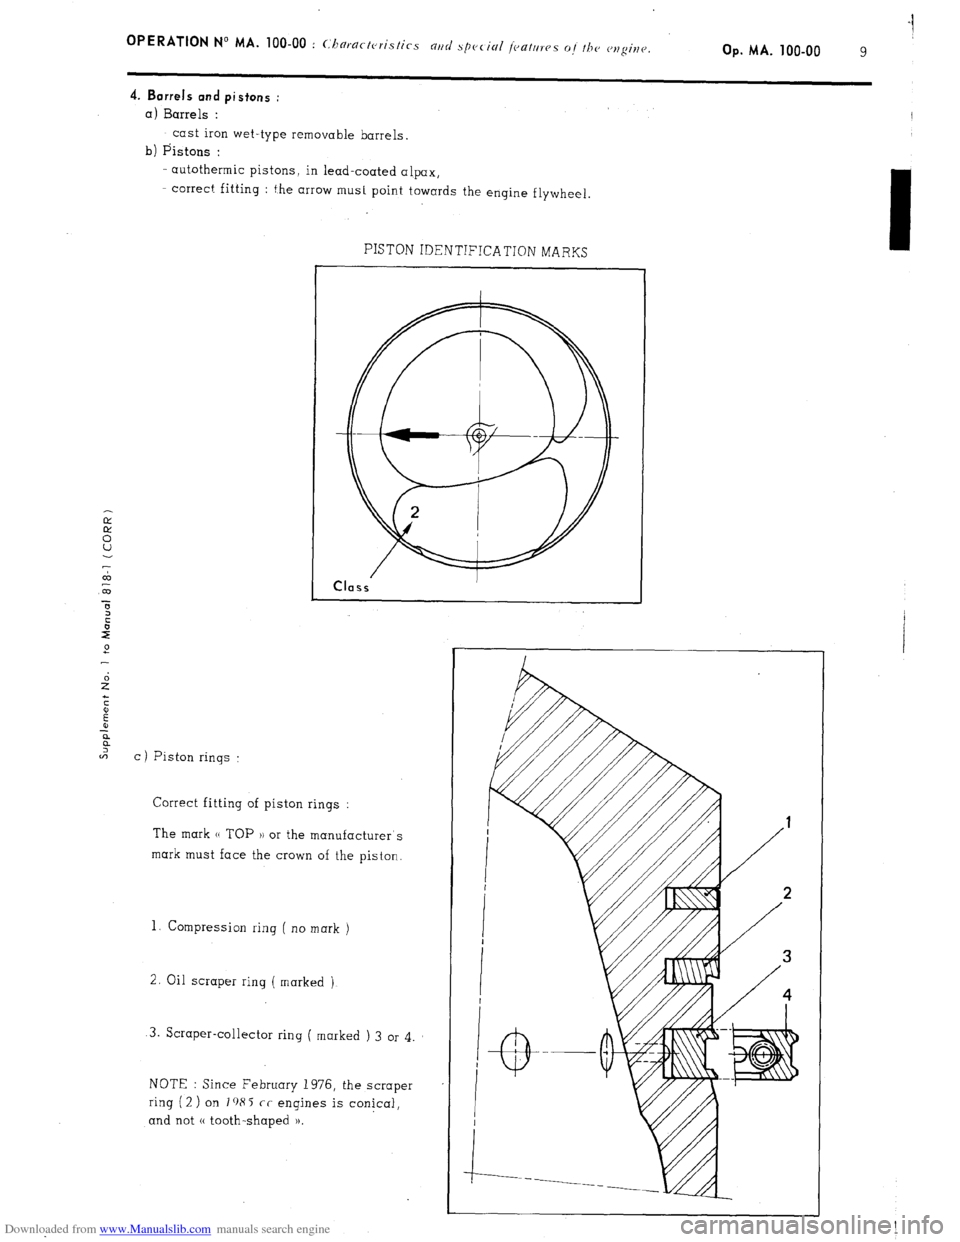 Citroen CX 1978 1.G Repair Manual Downloaded from www.Manualslib.com manuals search engine OPERATION N” MA. 100-00 : (:hnractc,ri.stics arid specinl j(,atrlres o,/ the> cl,gi?lcJ. Op. MA. 100-00 1 
9 
4. Barrels and pistons : 
a) 
B